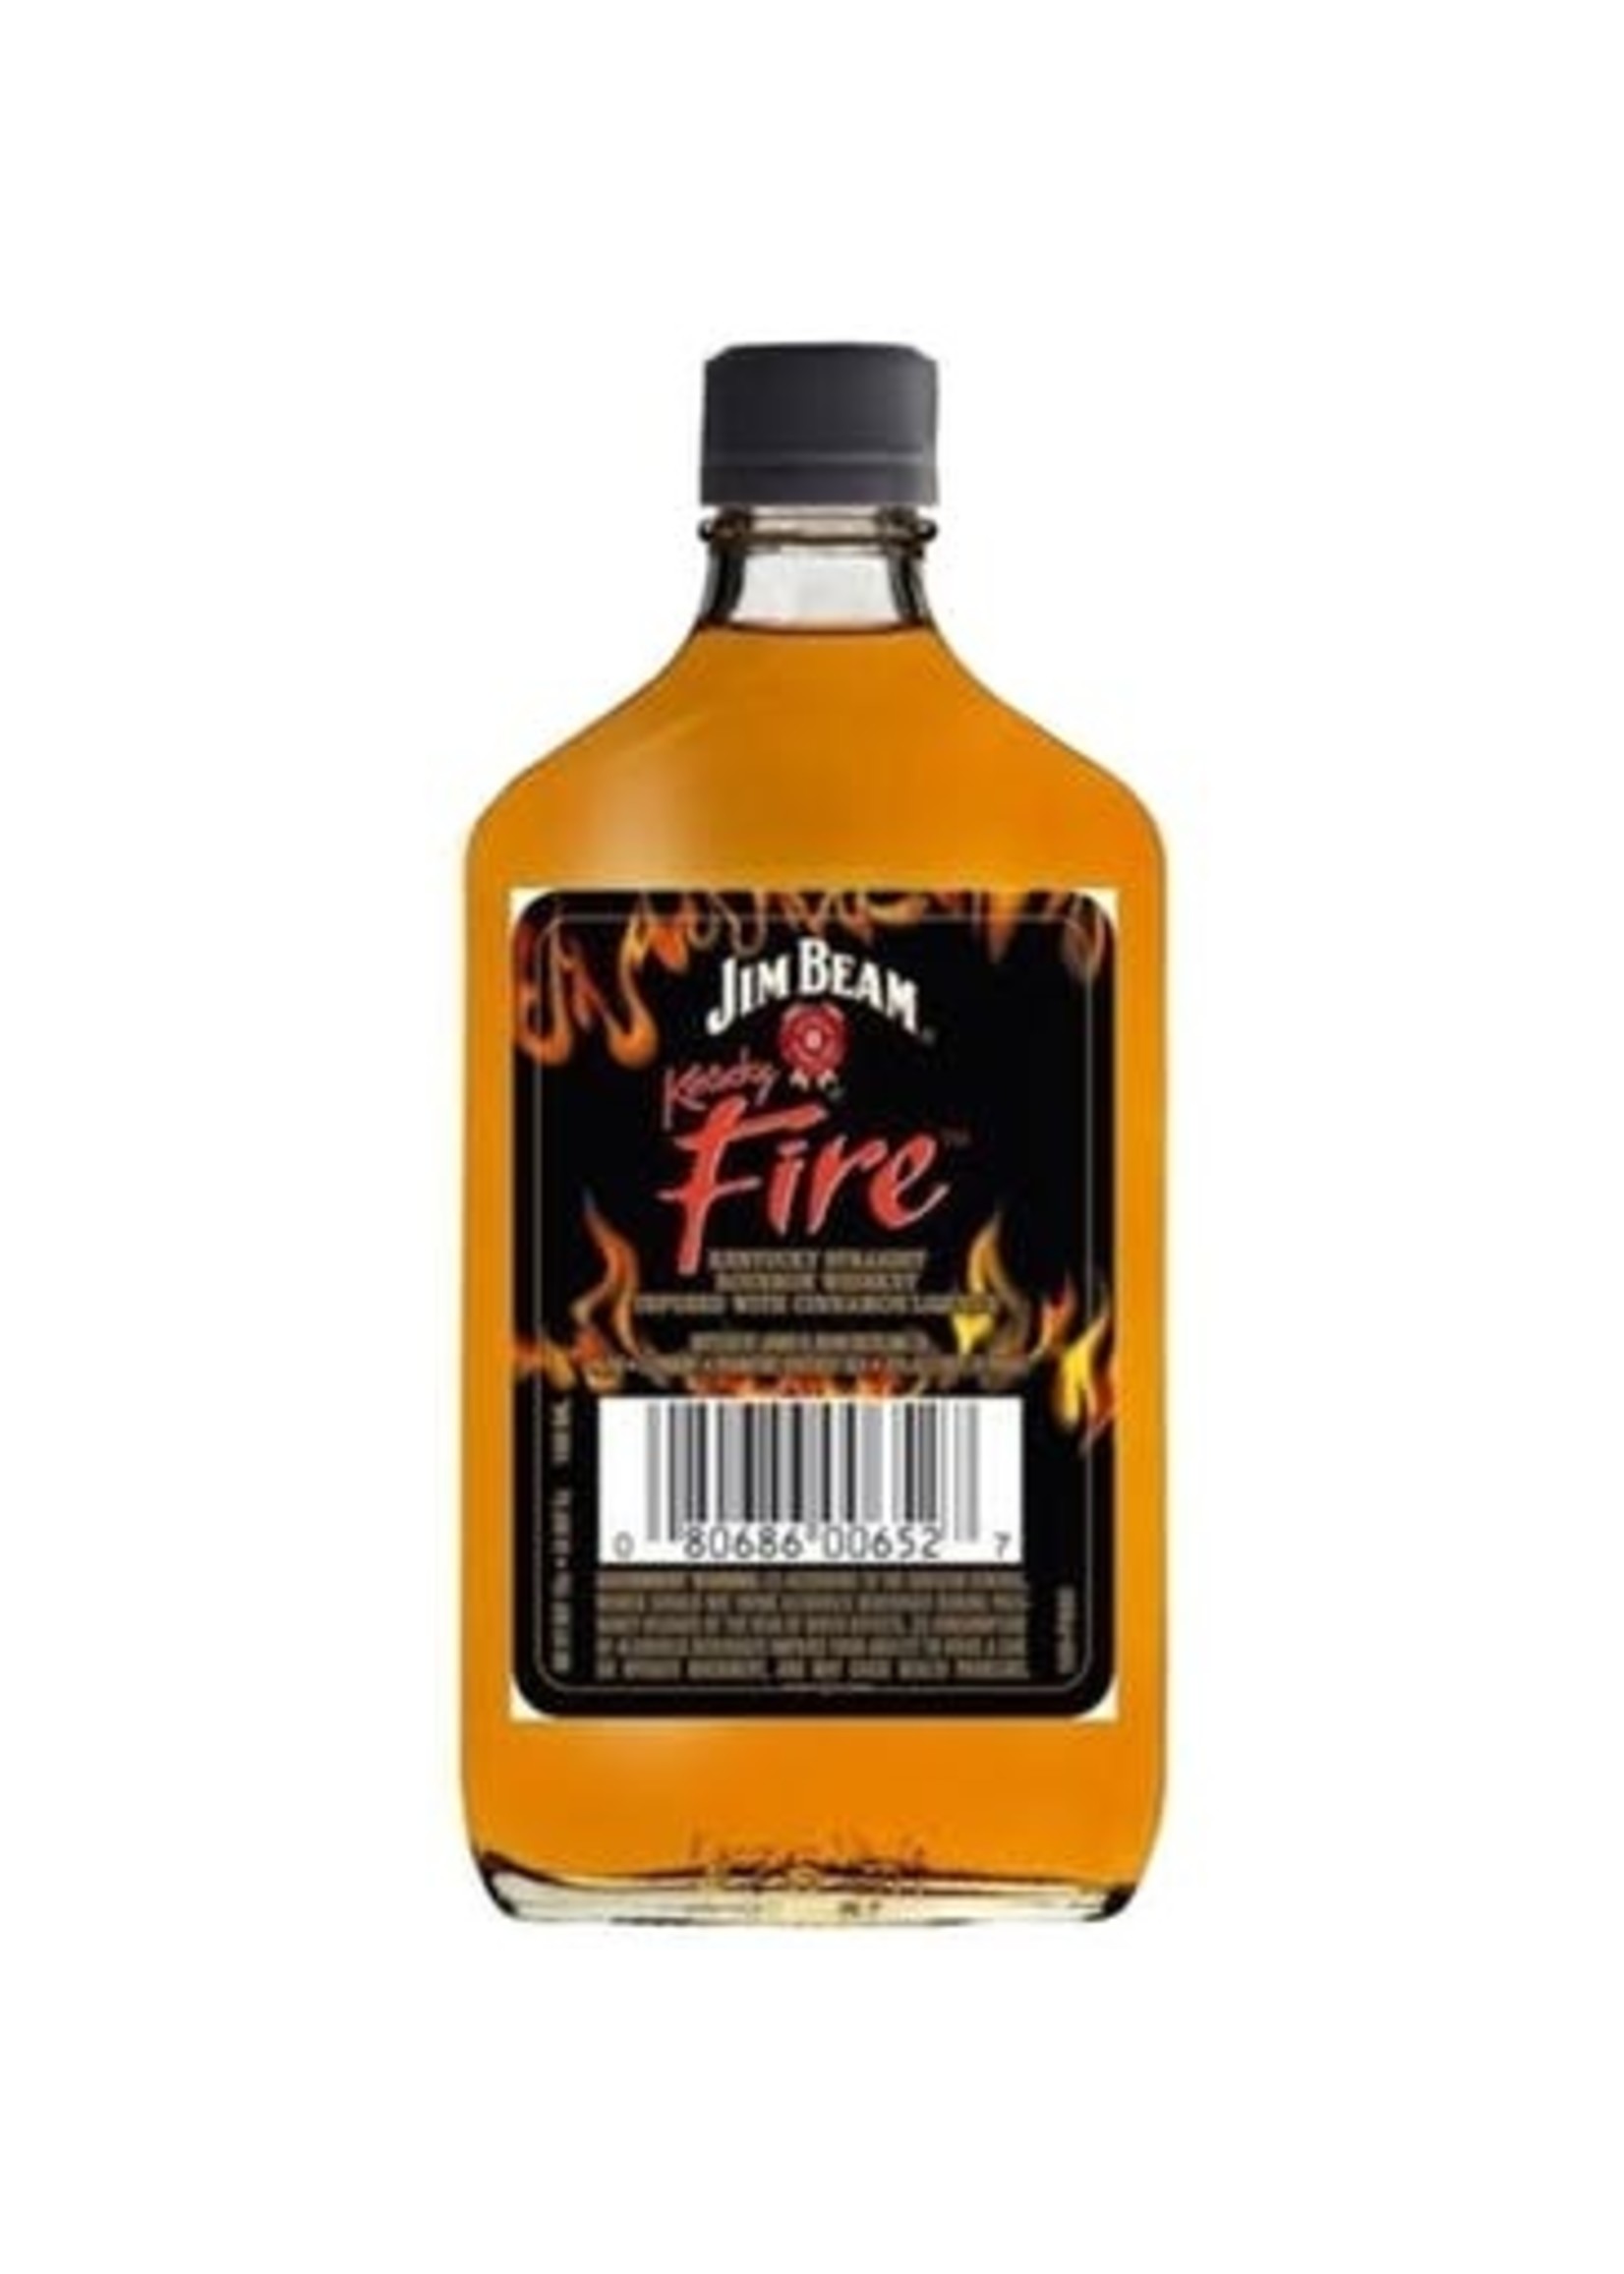 Jim Beam Jim Beam Cinnamon Flavored Whiskey Kentucky Fire 65Proof Pet 375ml